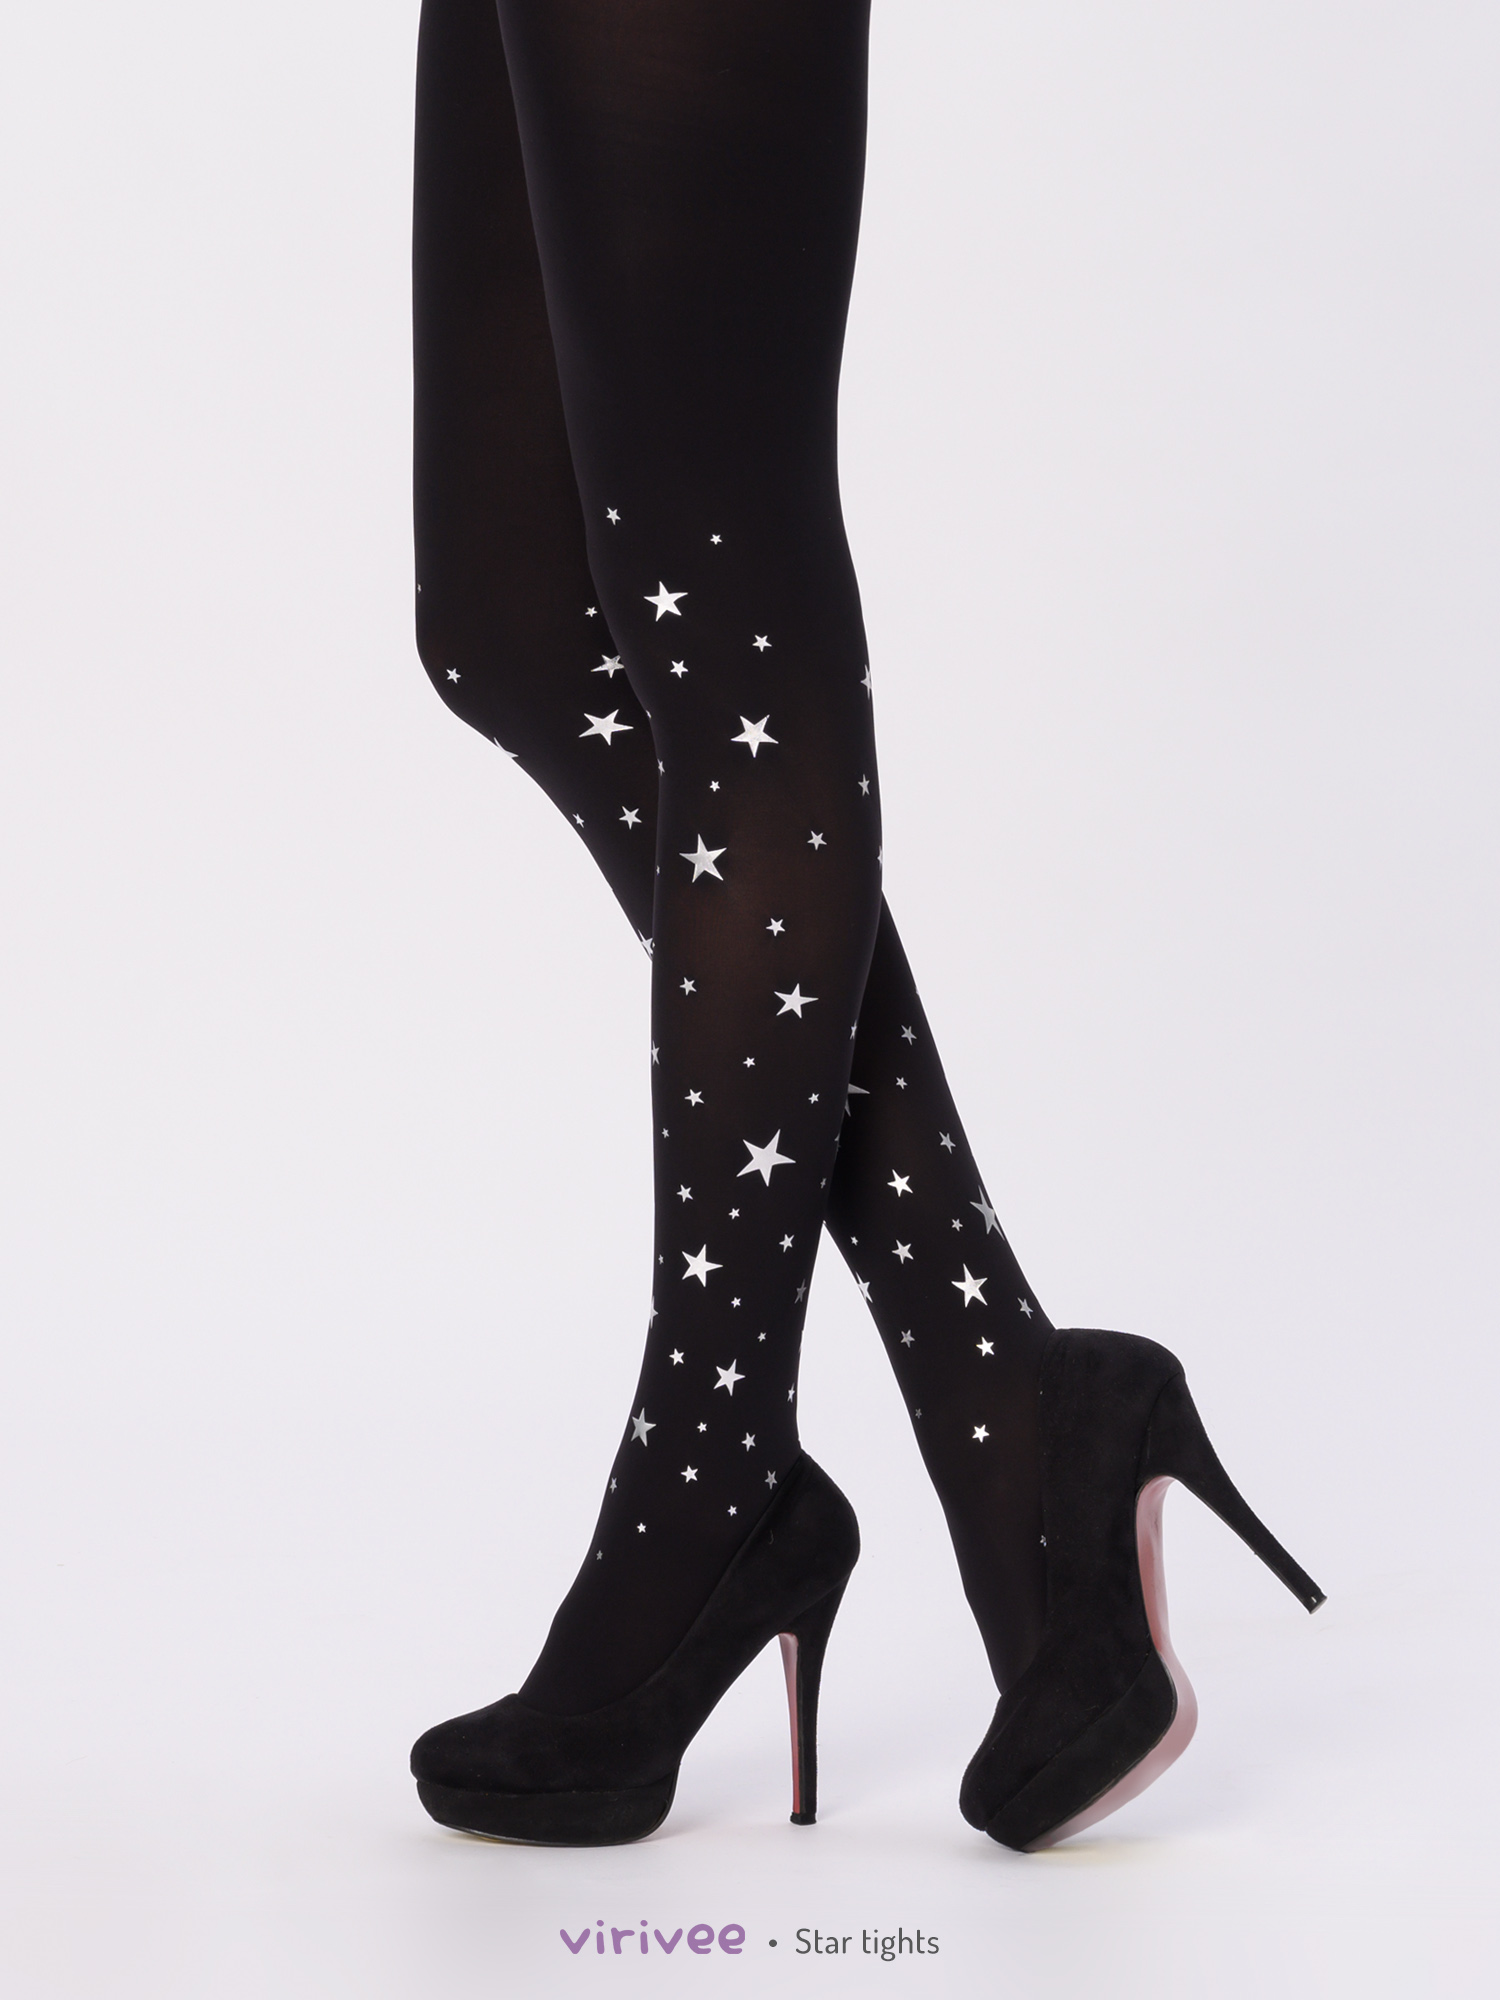 Black star tights by Virivee